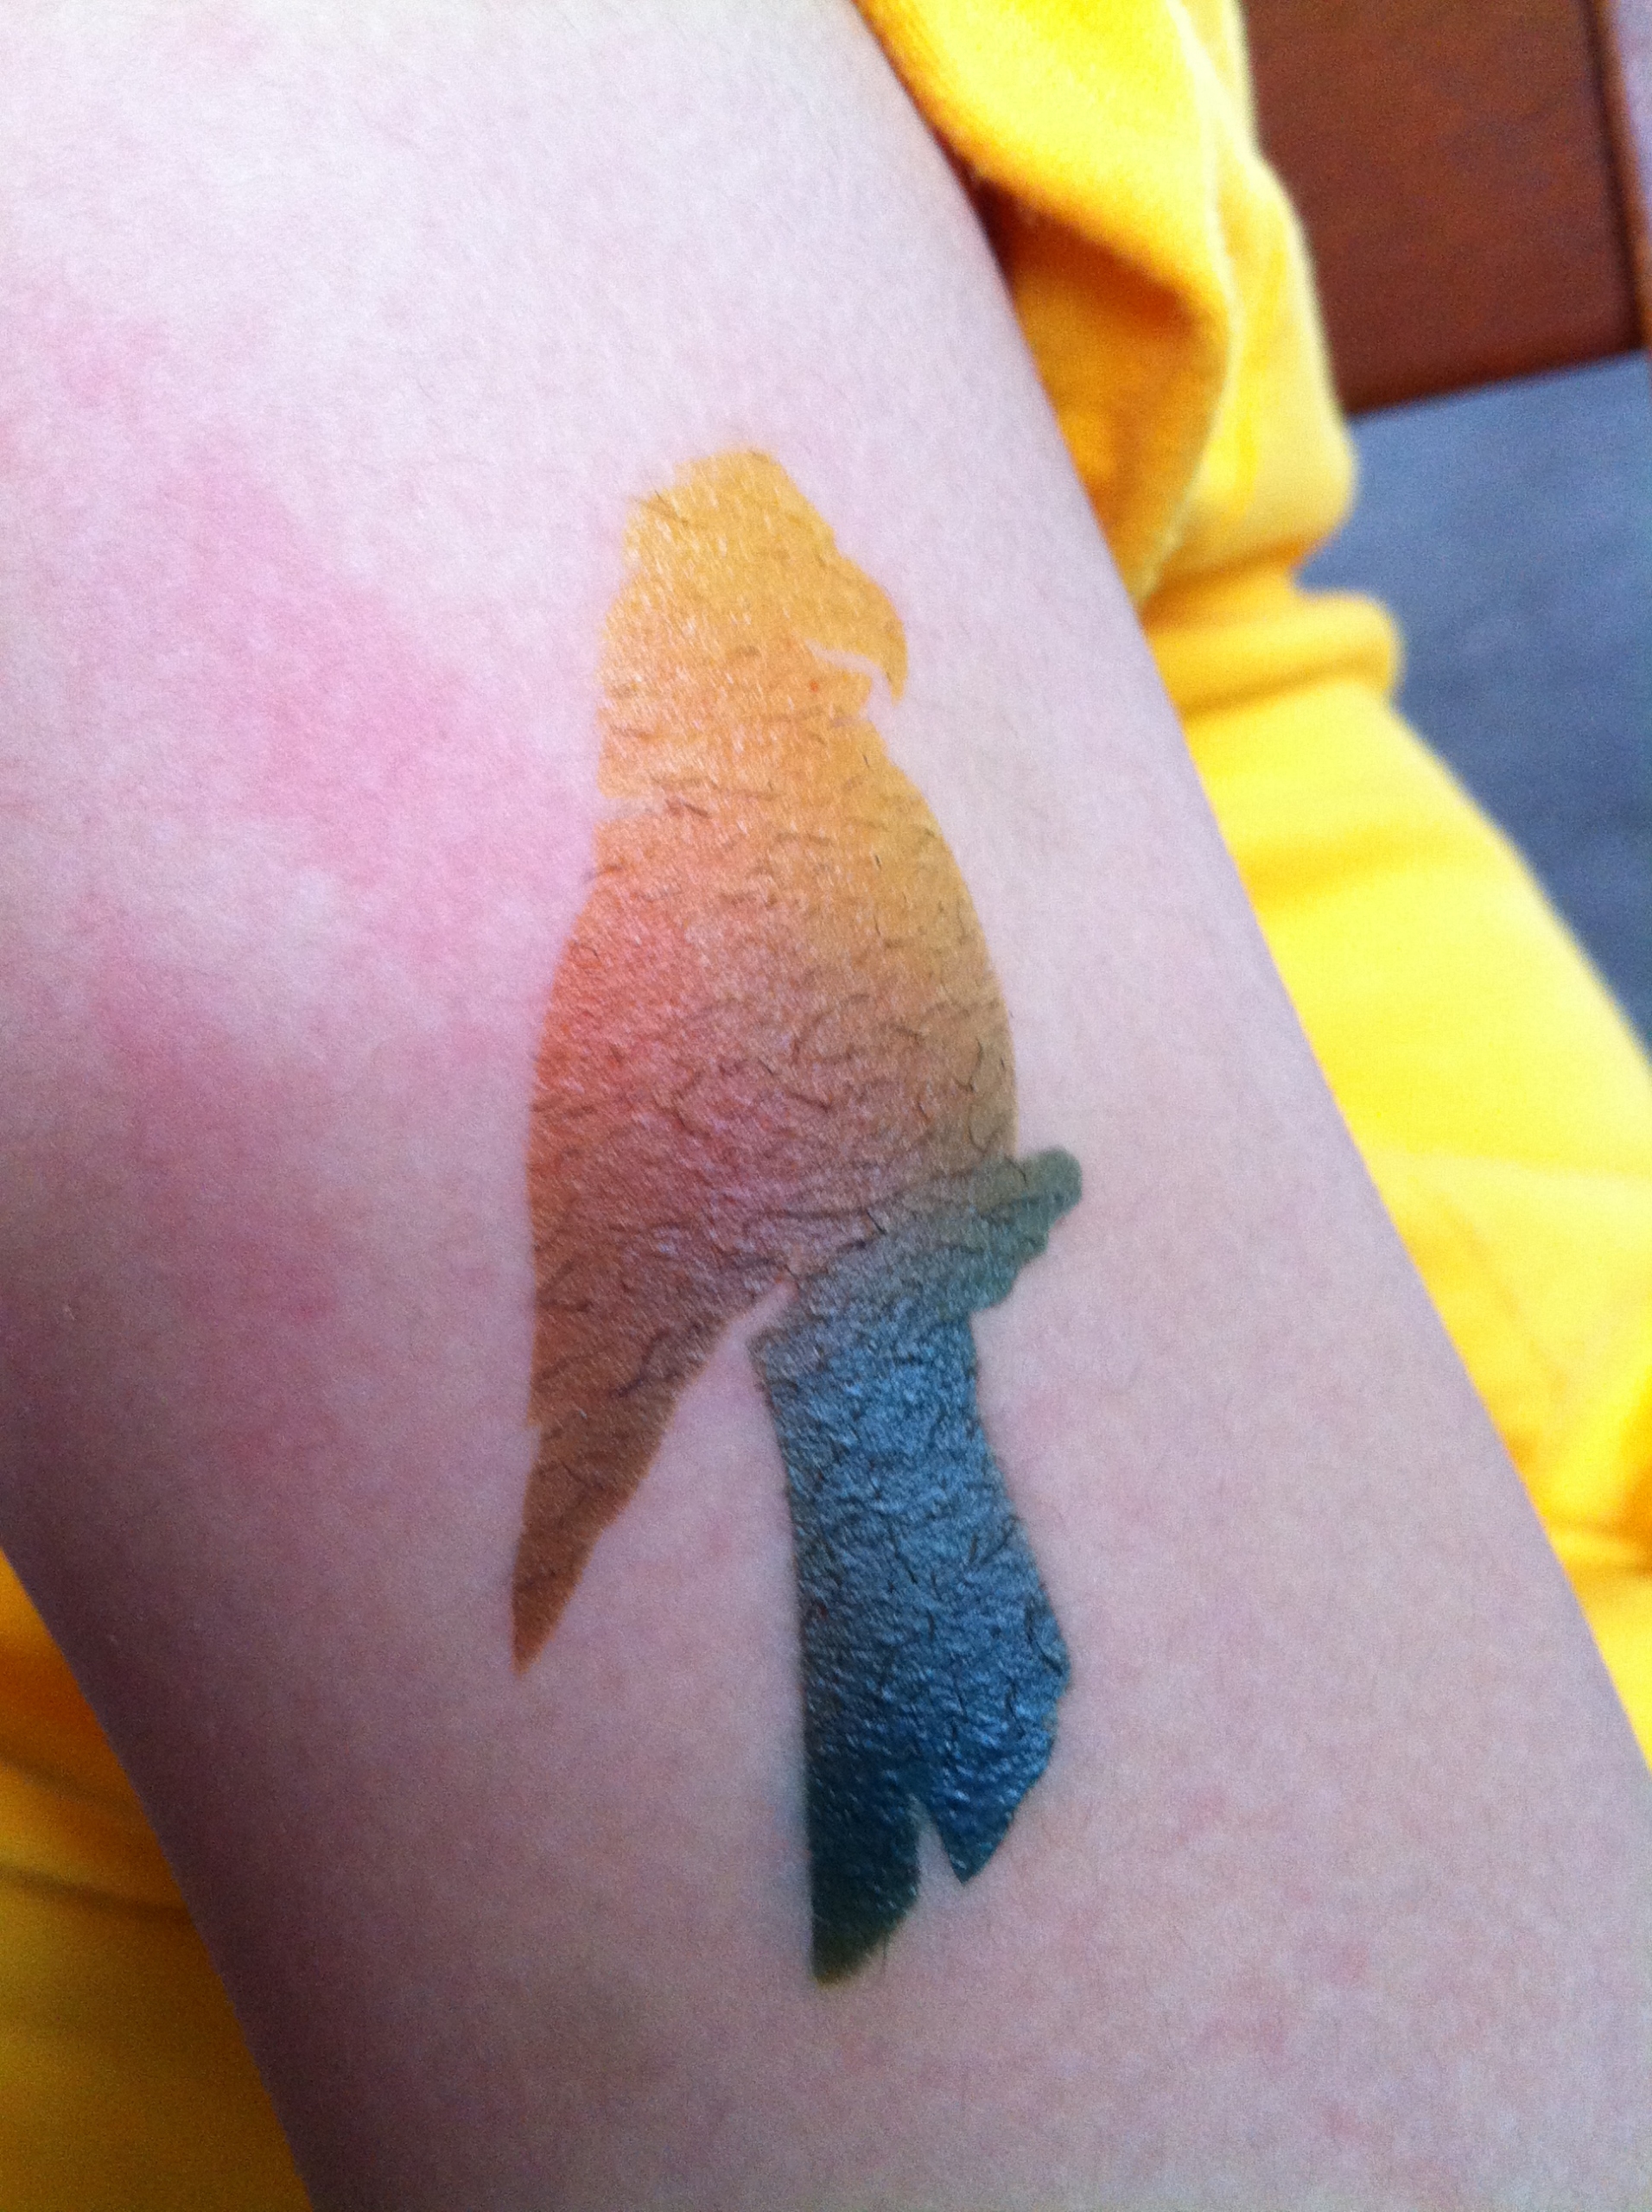 Multicoloured parrot airbrush tattoo